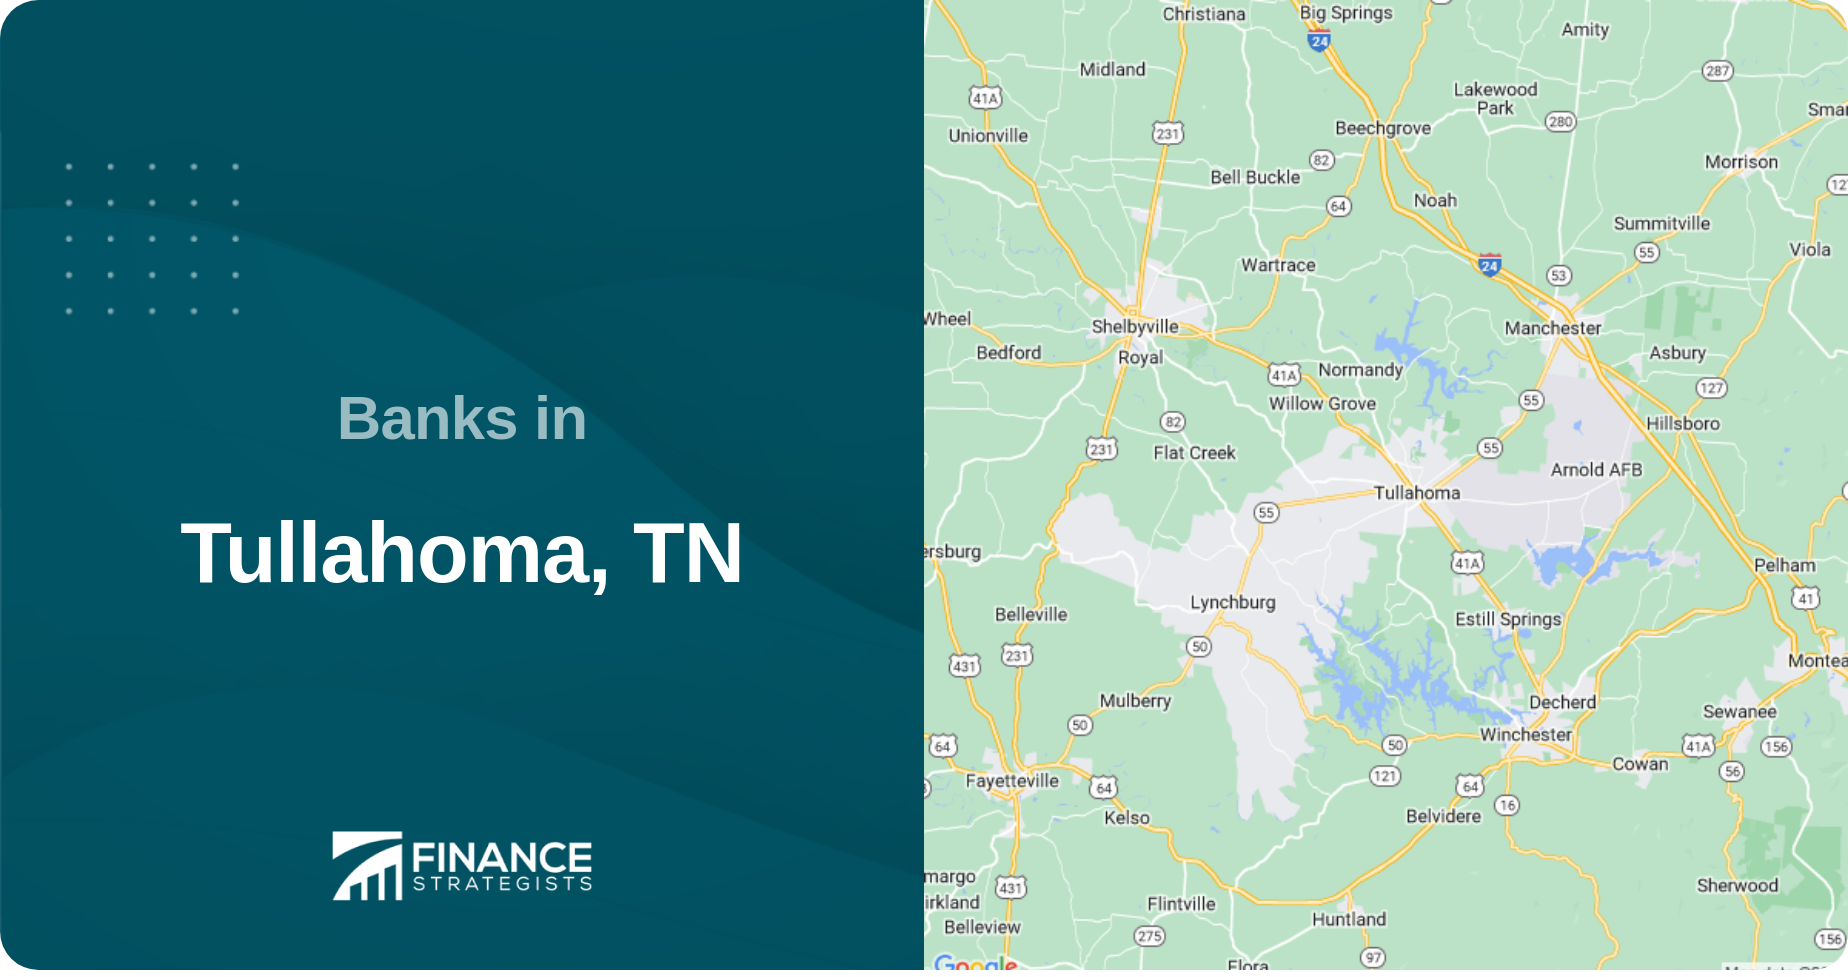 Banks in Tullahoma, TN